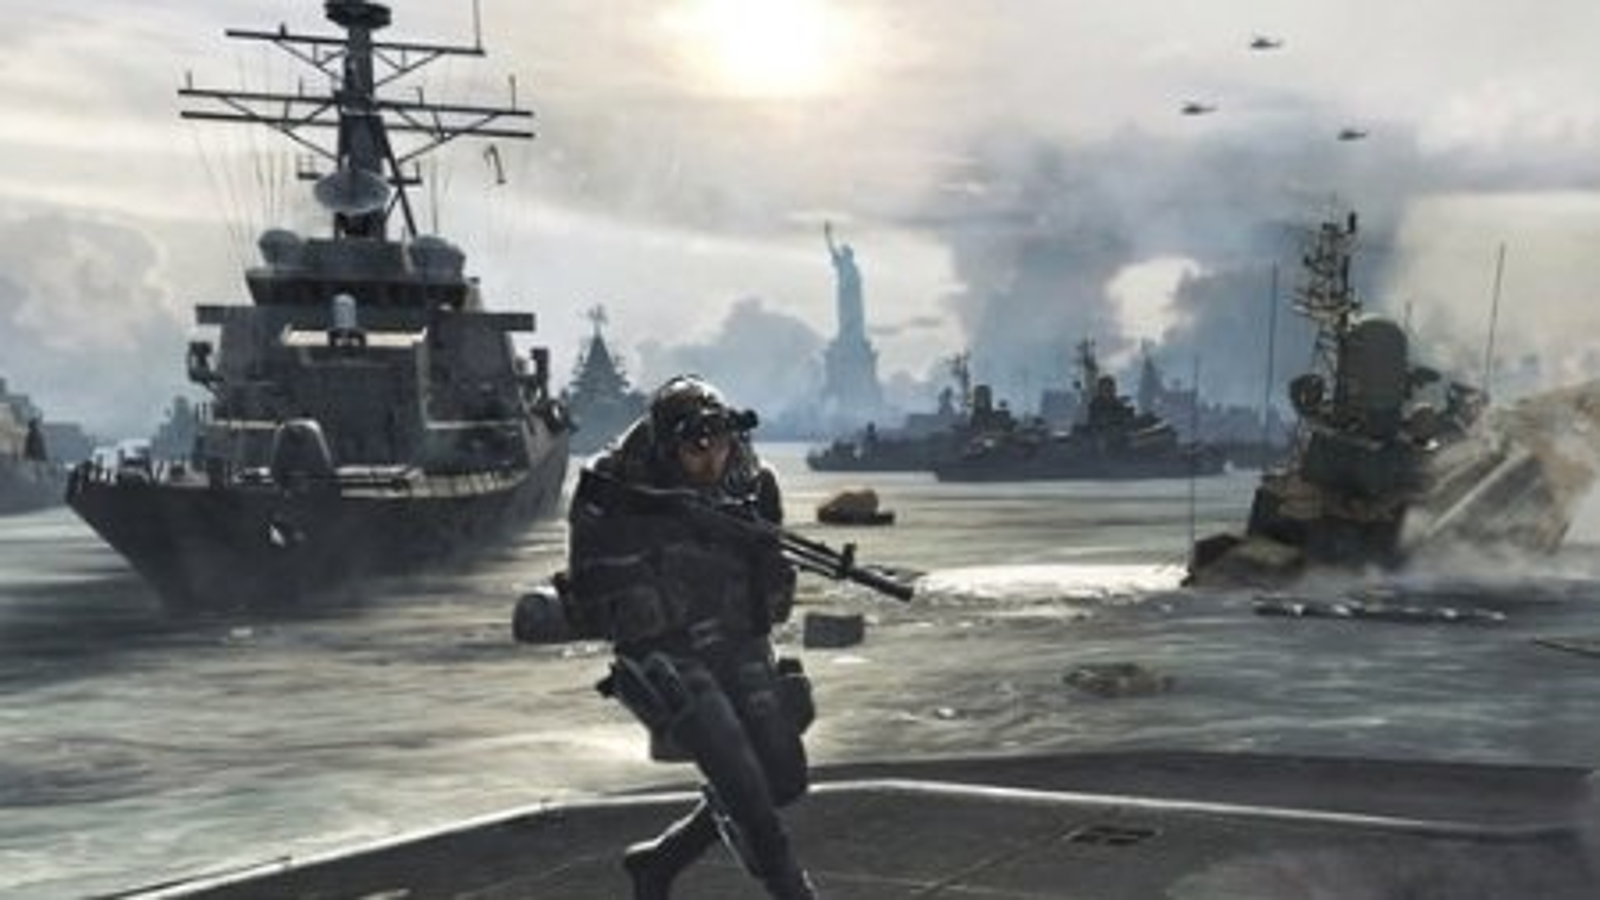 Call of Duty: Modern Warfare 3 (2011), PS3 Game